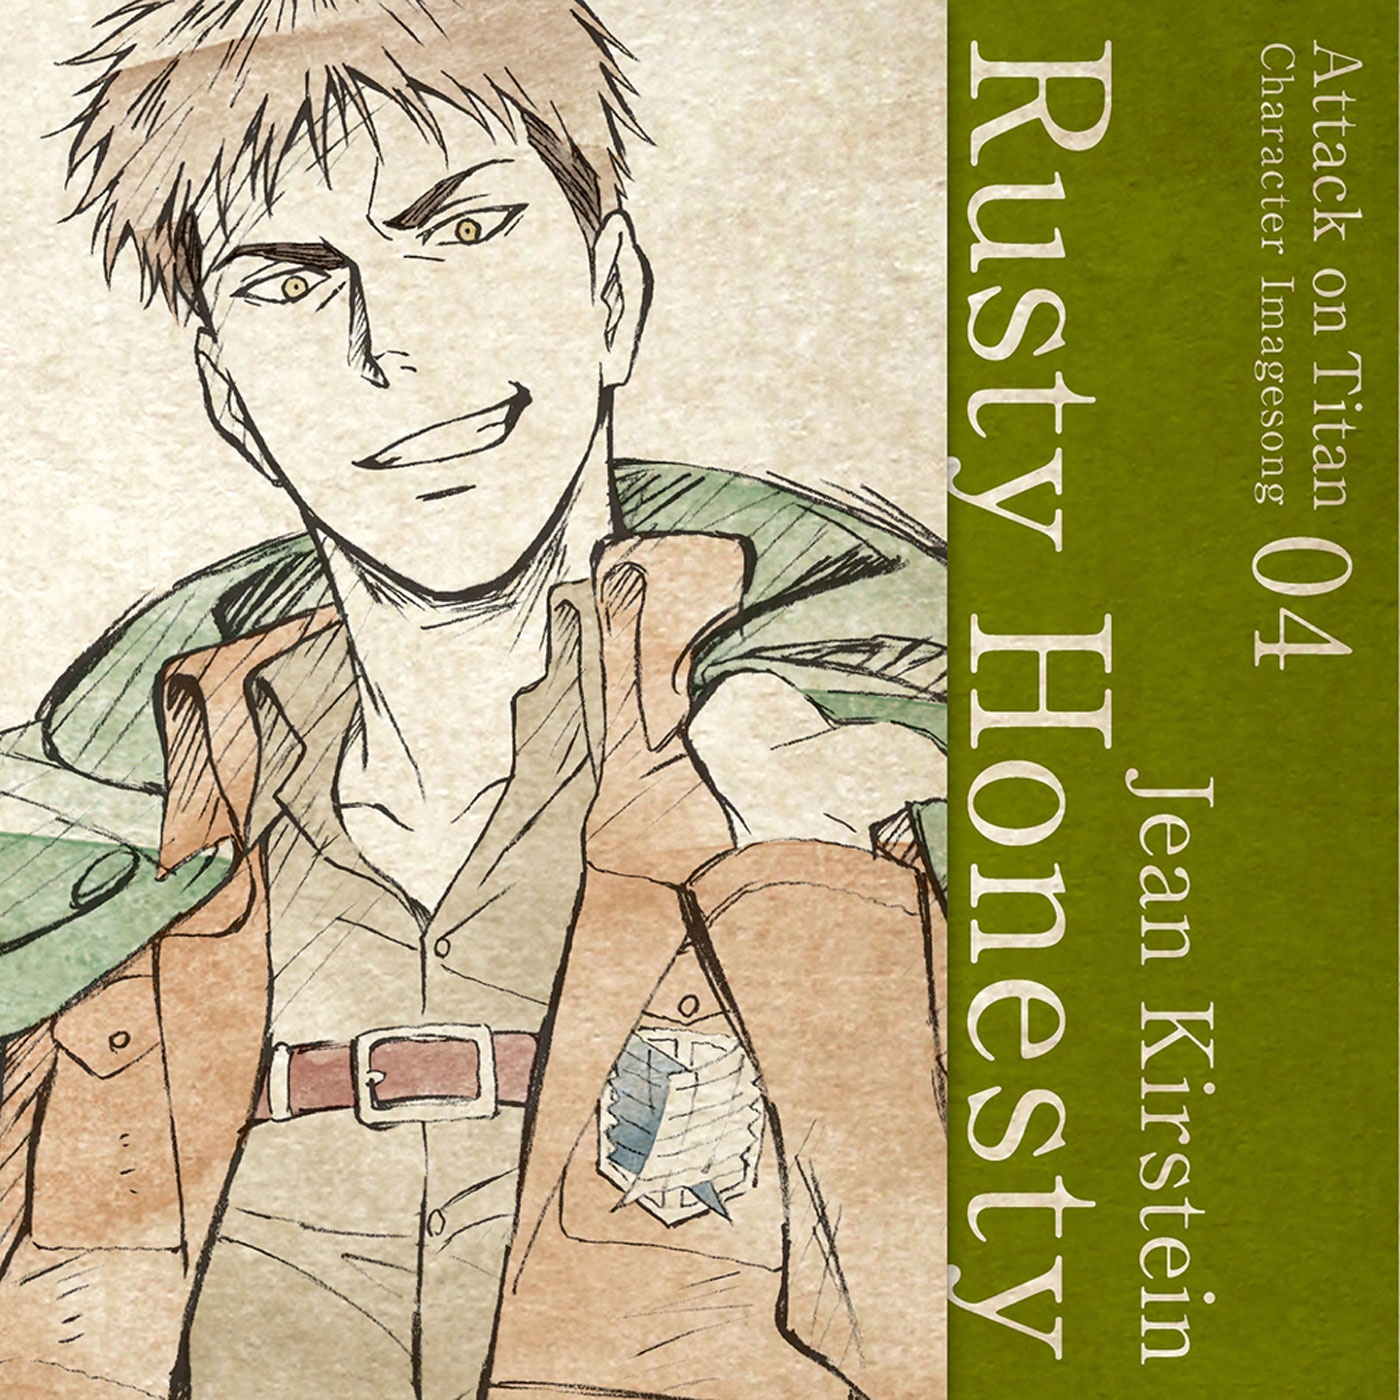 Rusty Honesty (instrumental)